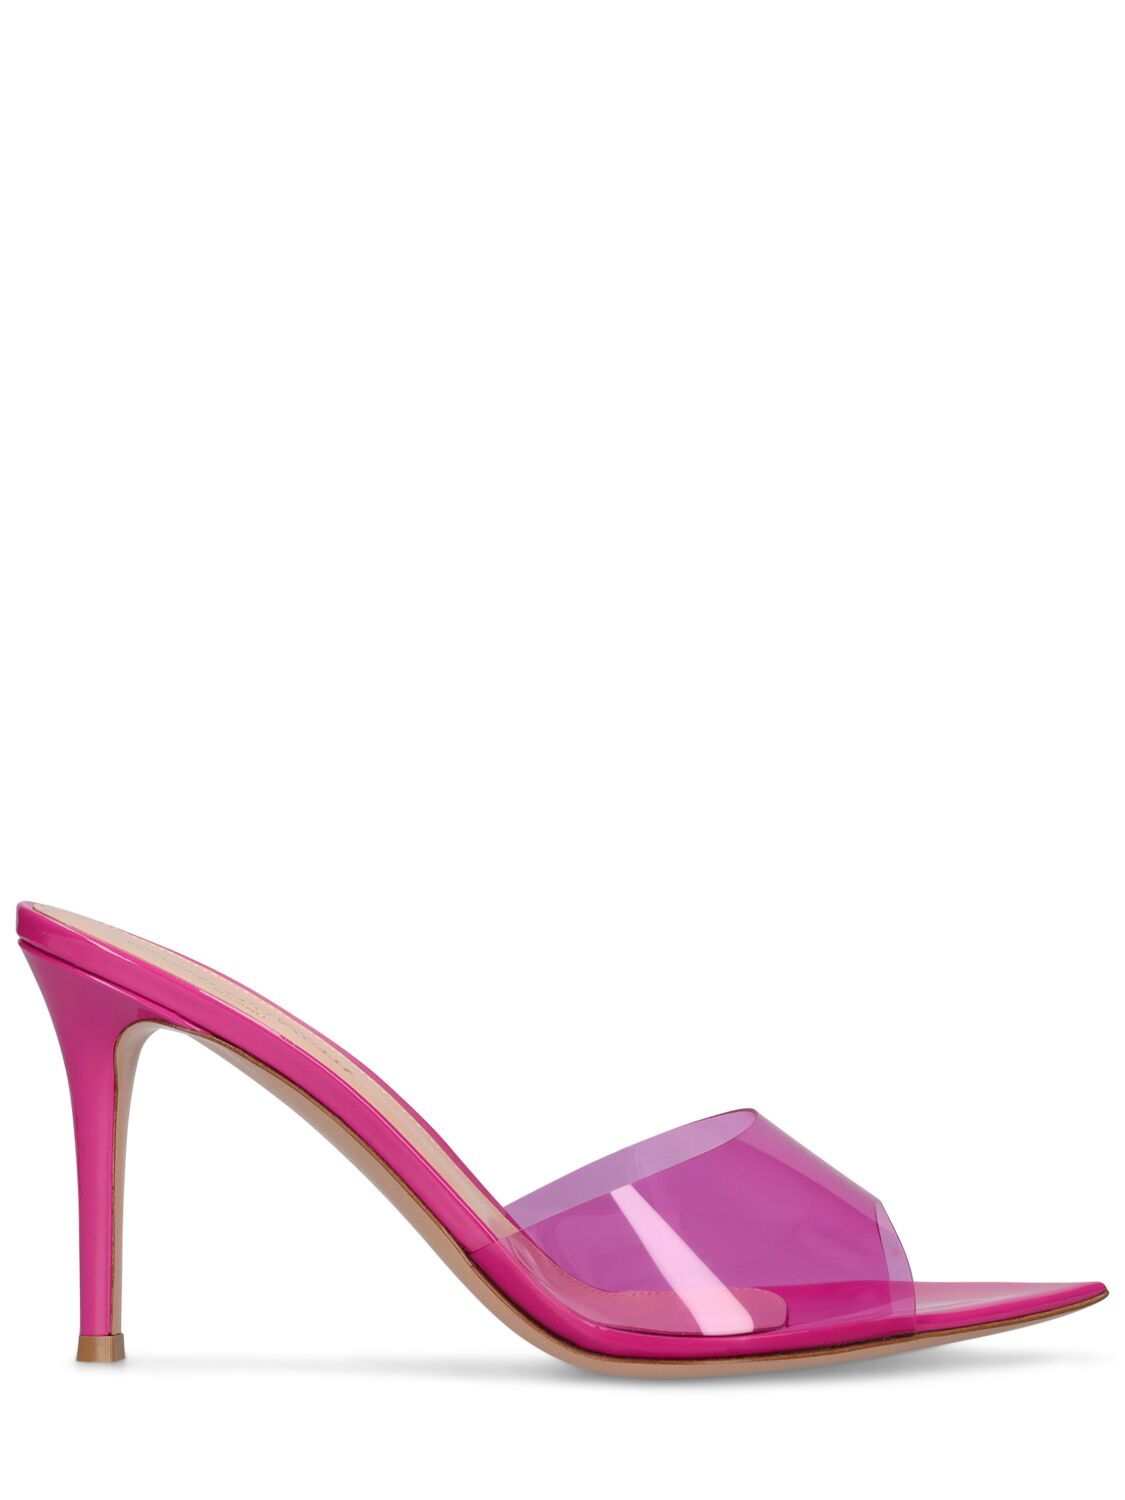 Gianvito Rossi 85mm Elle Pvc Mule Sandals In Pink